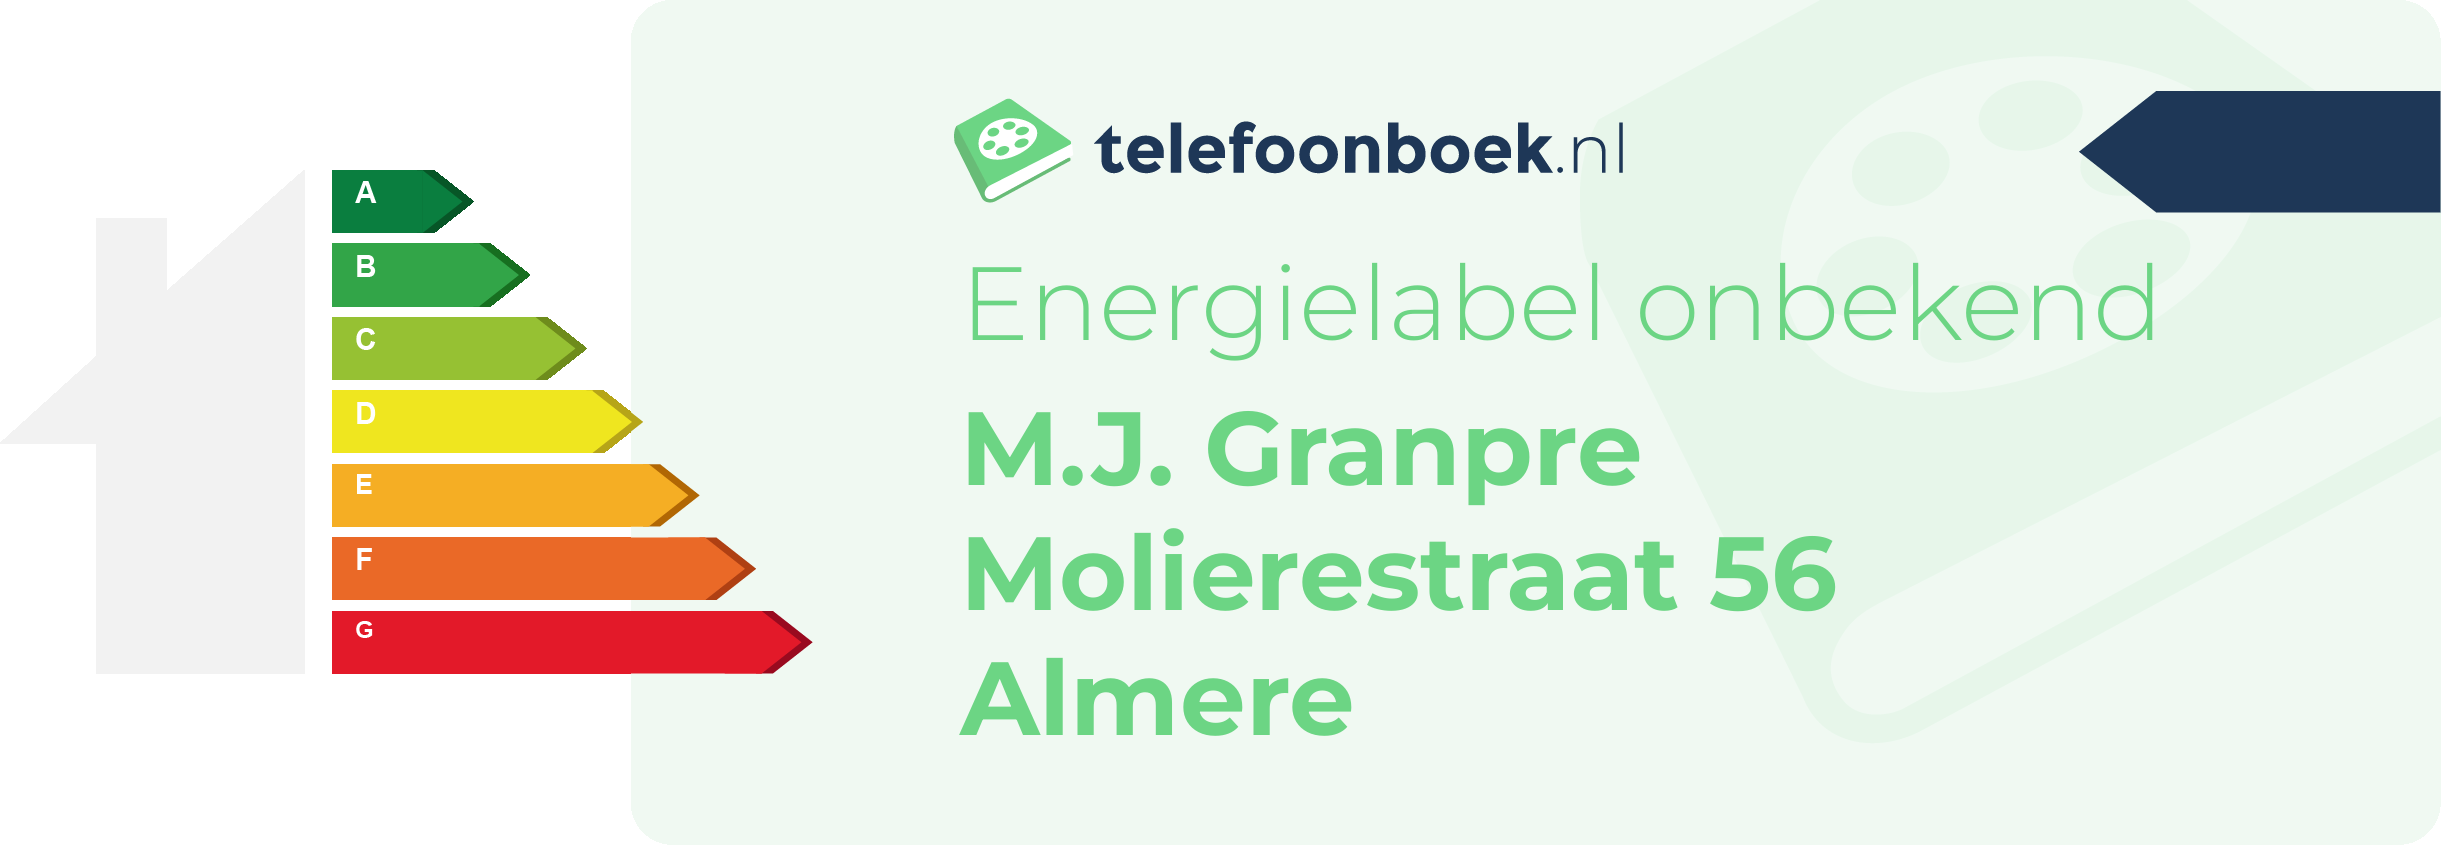 Energielabel M.J. Granpre Molierestraat 56 Almere